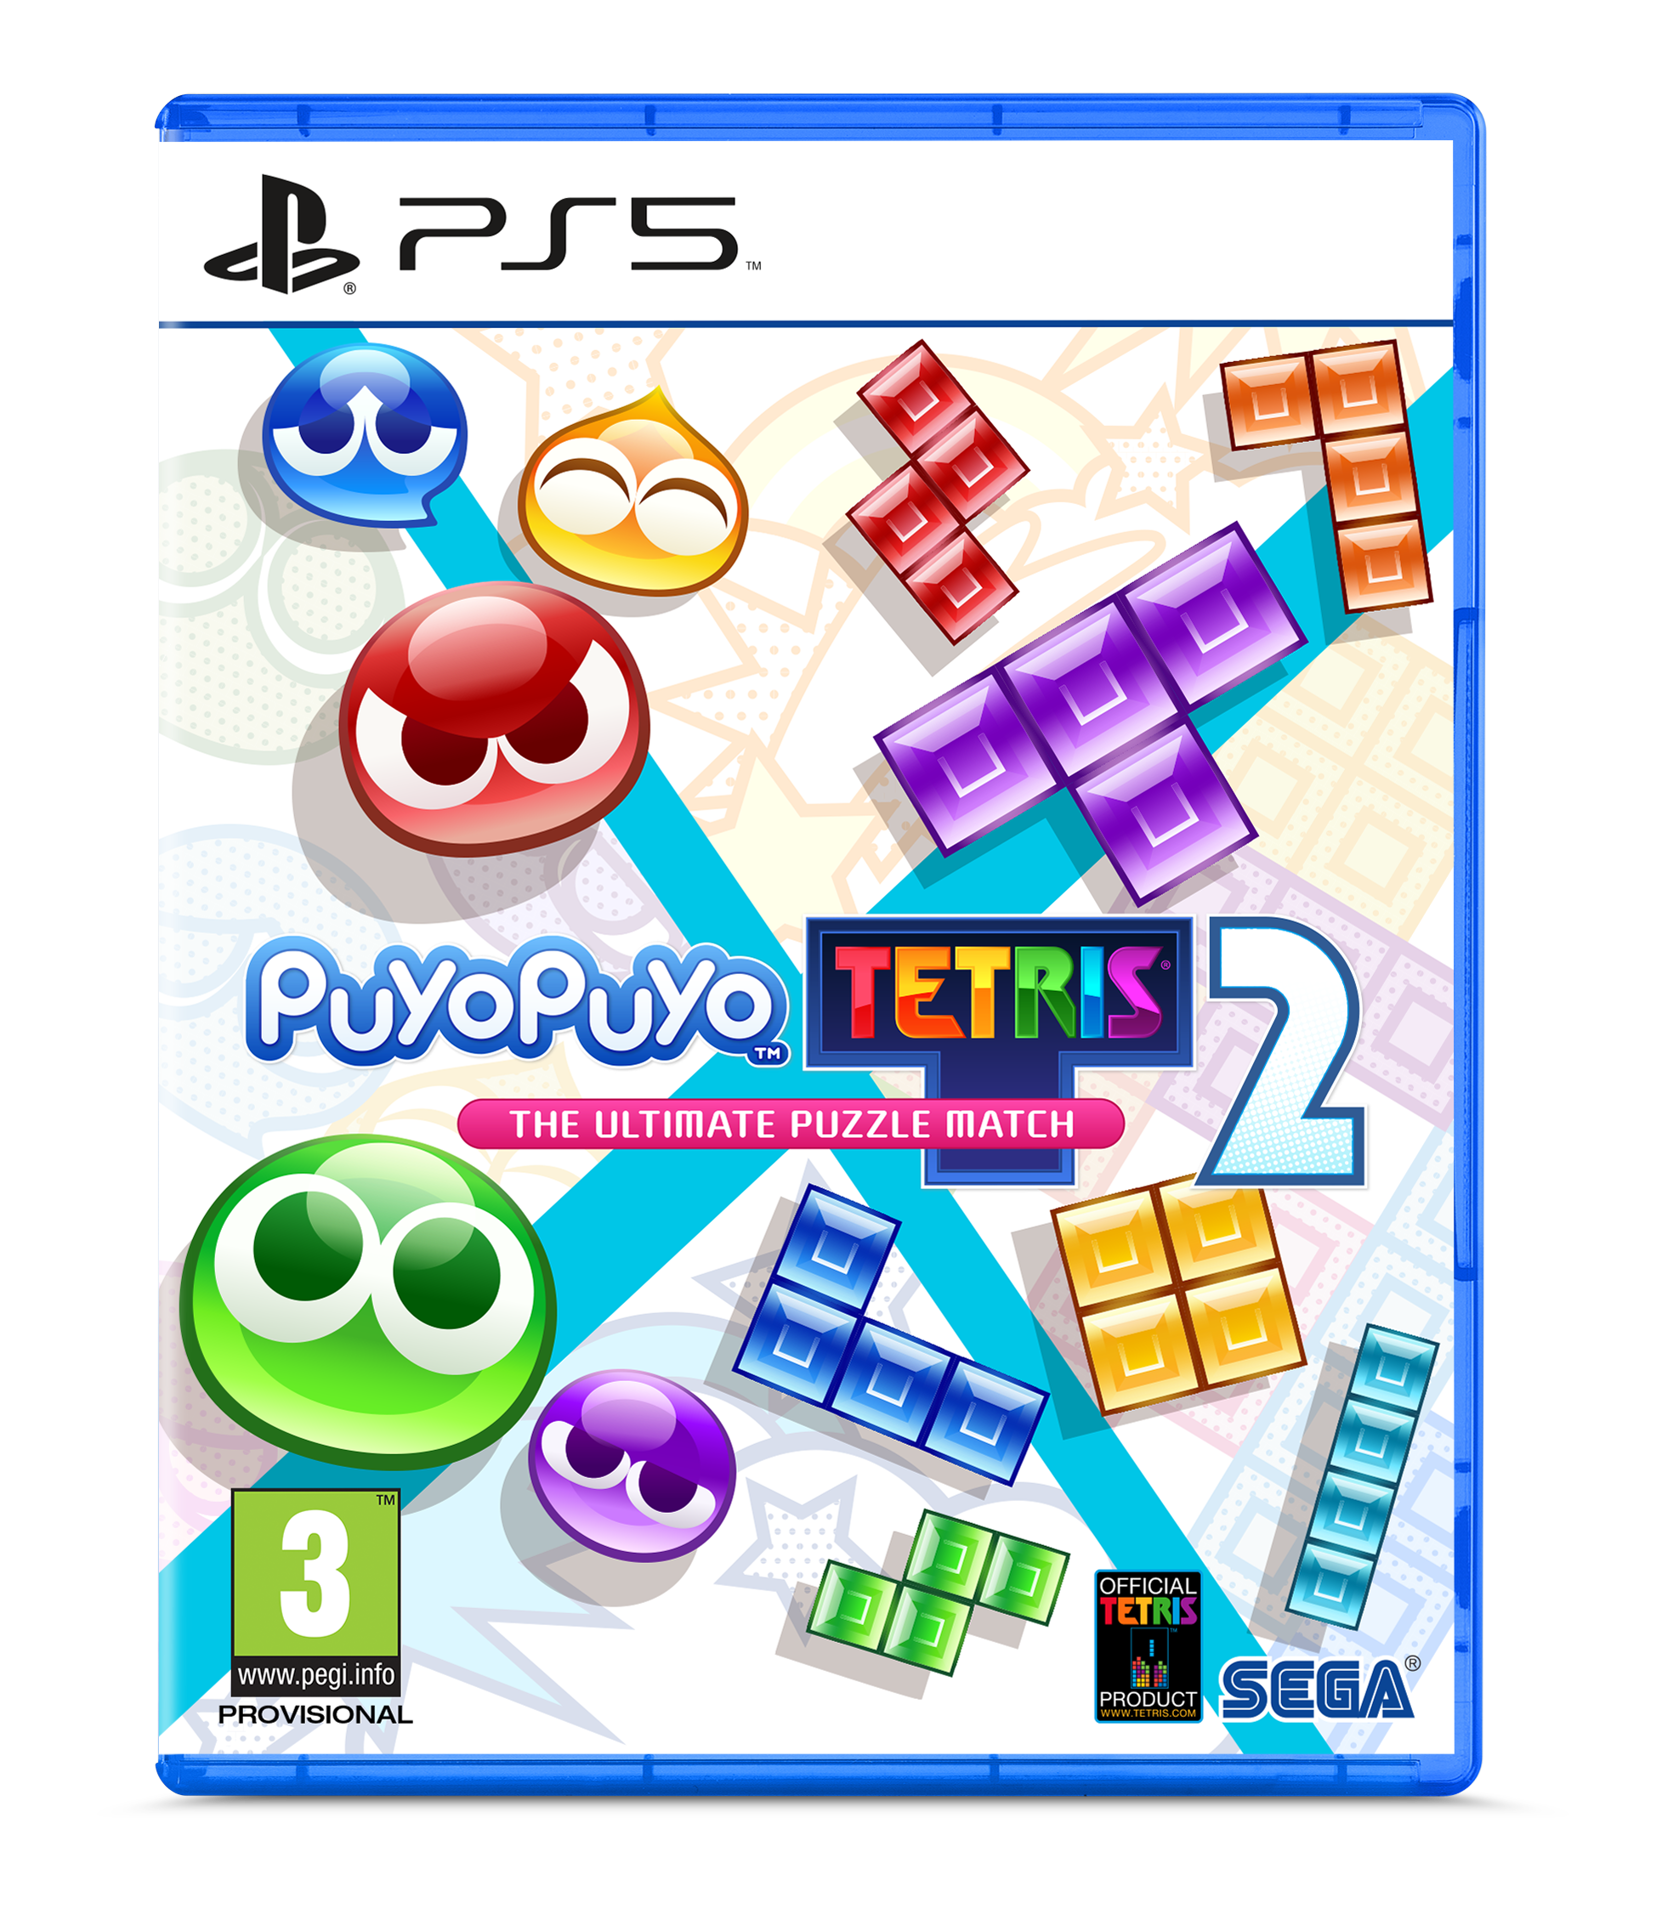 Puyo Puyo Tetris 2 Launch Edition